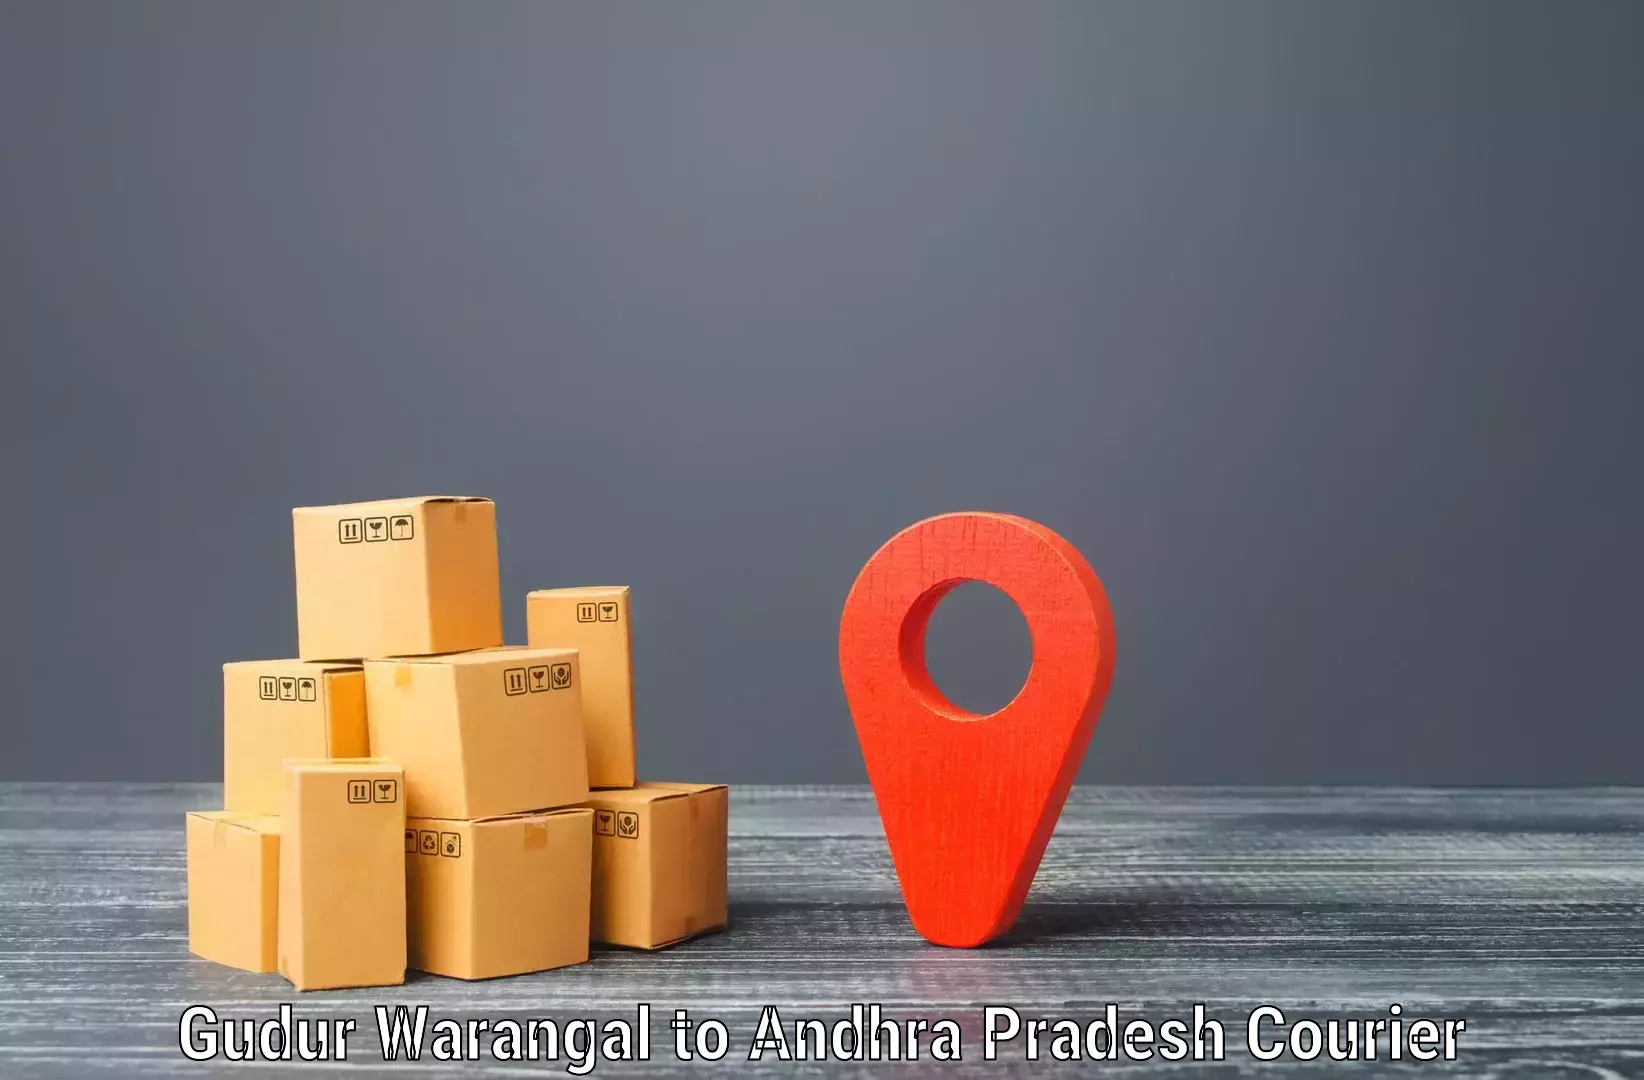 Package delivery network Gudur Warangal to Kondapi